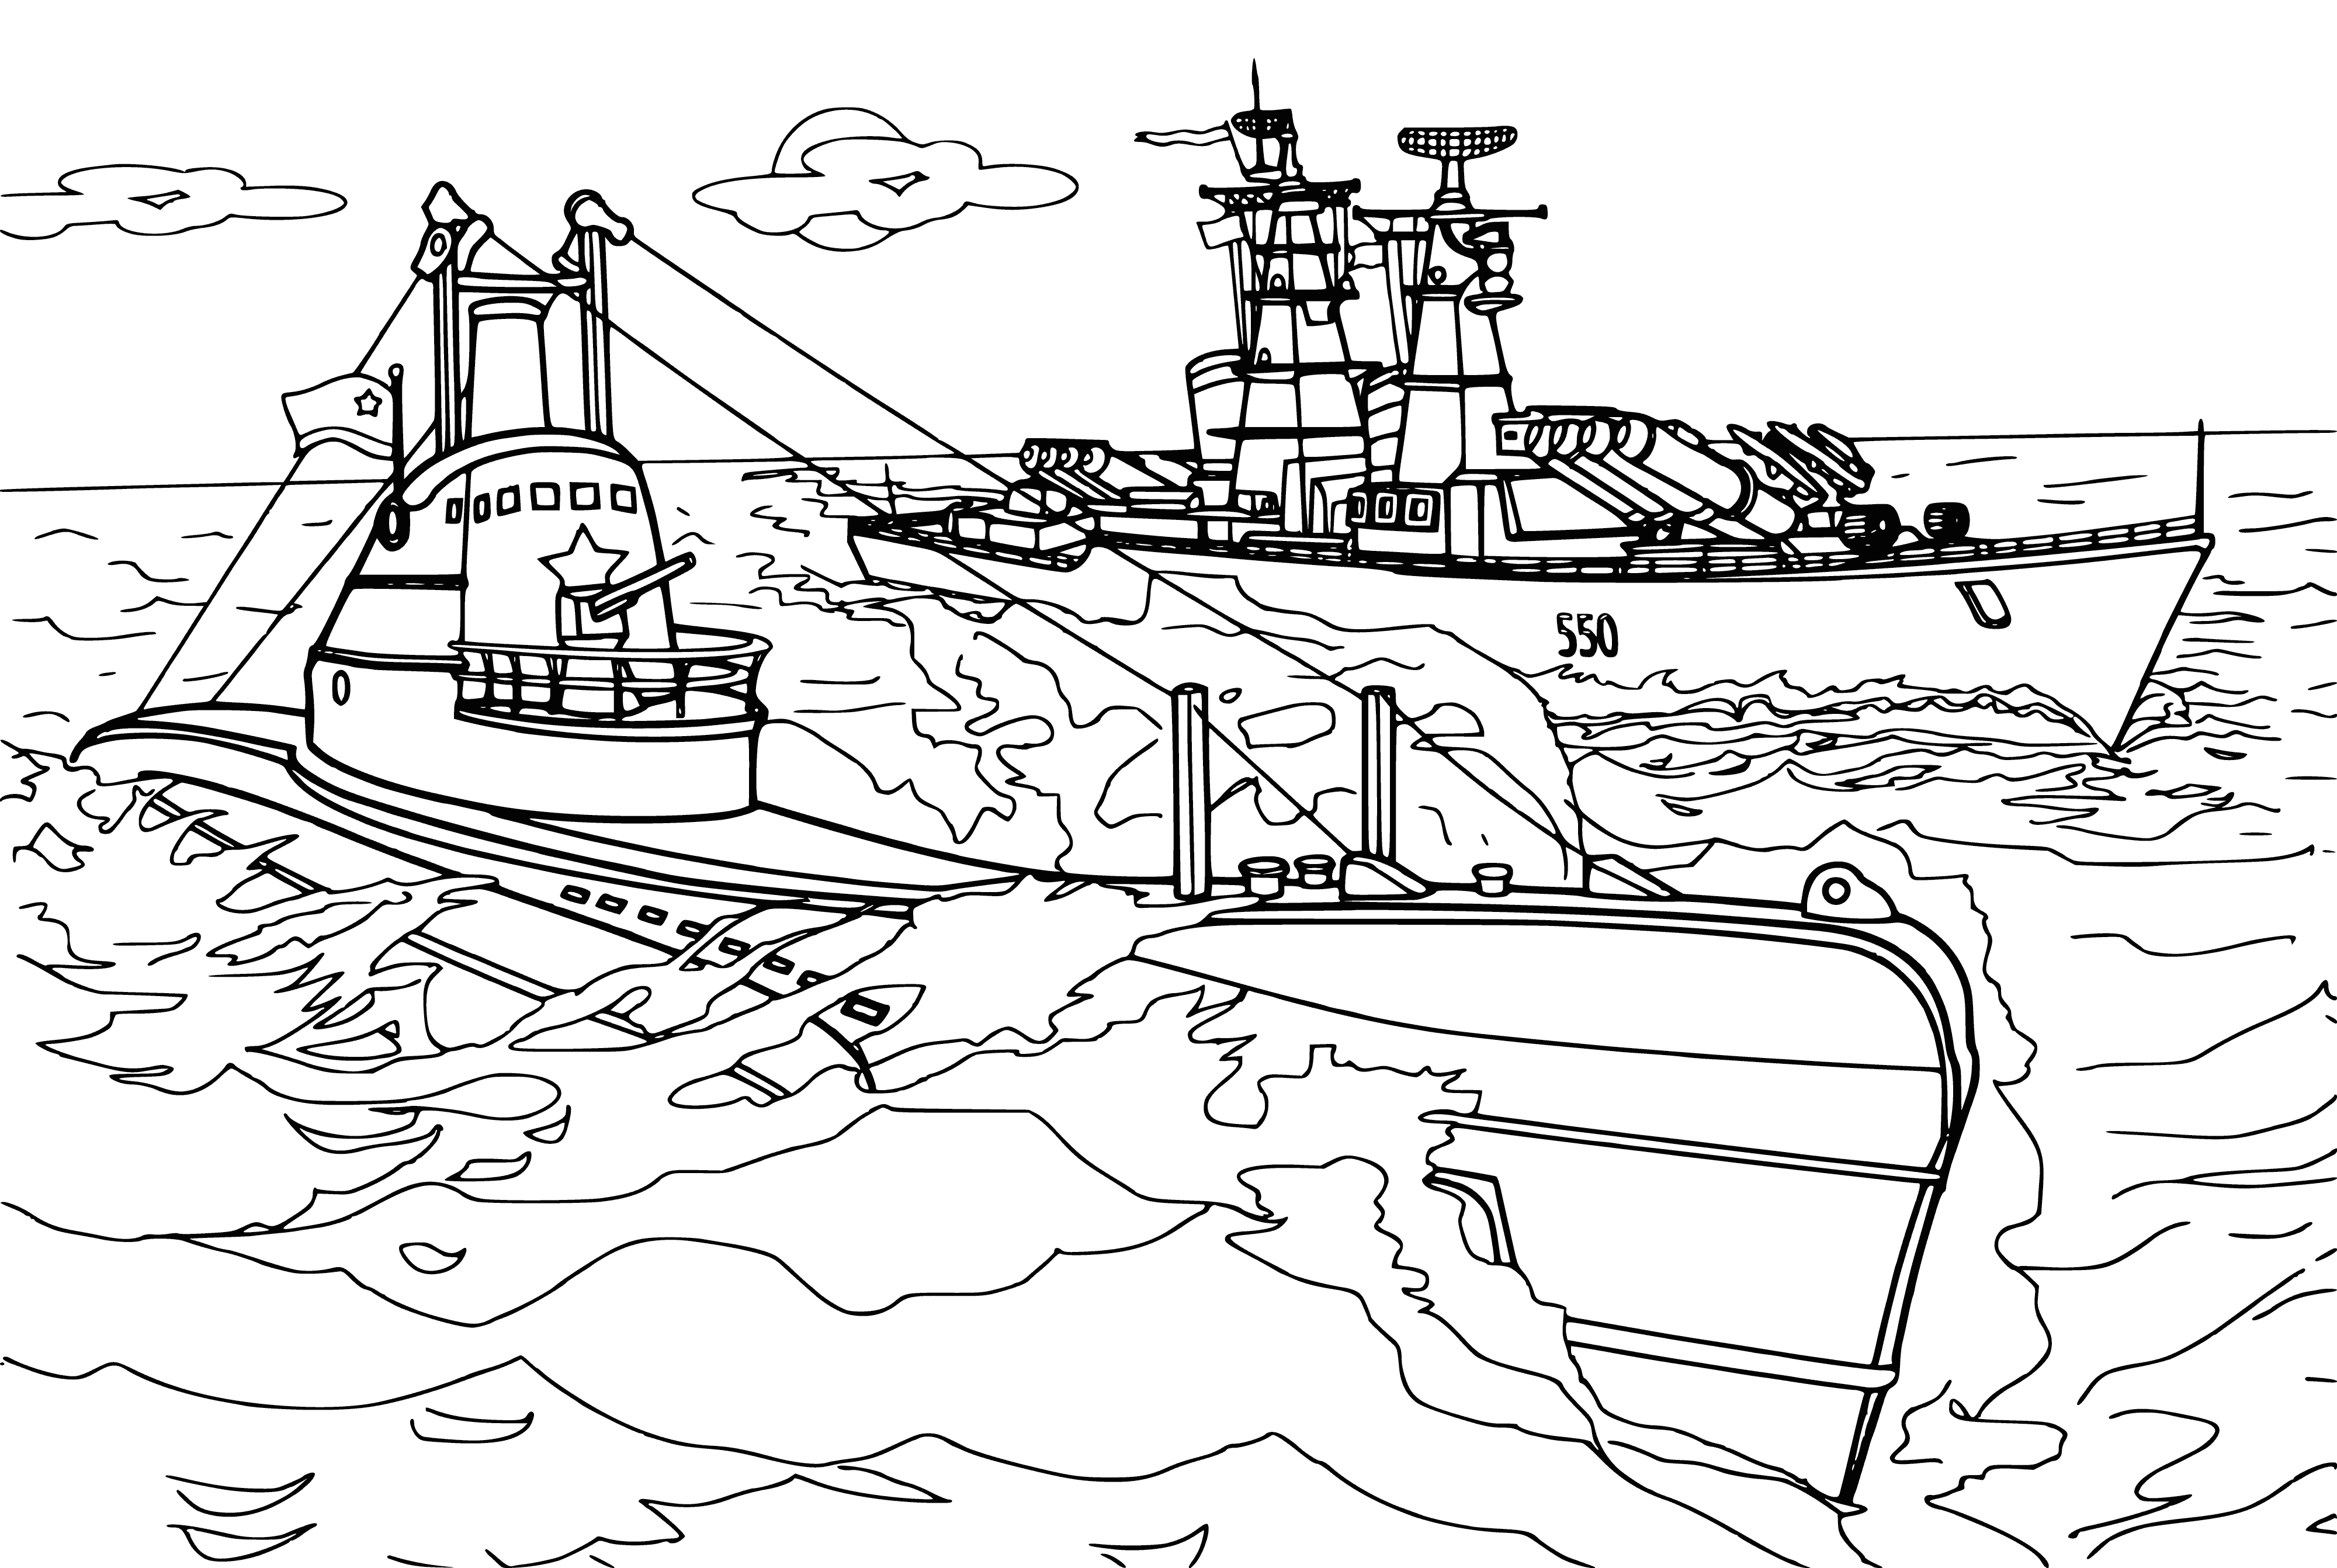 Sous-marin Sch-402 coloriage